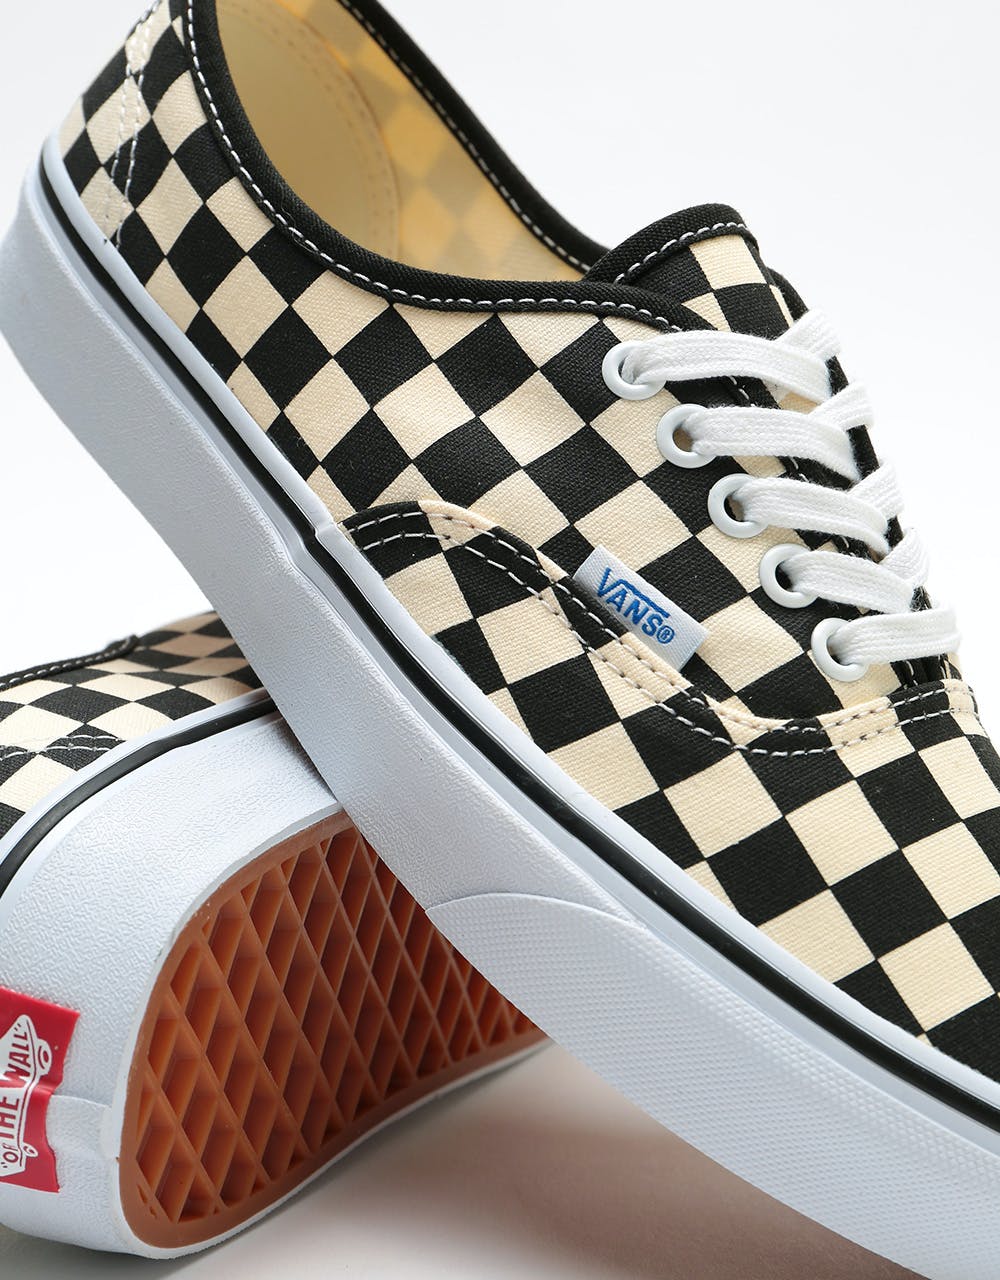 Vans Authentic Skate Shoes - (Golden Coast) Black/White Checker